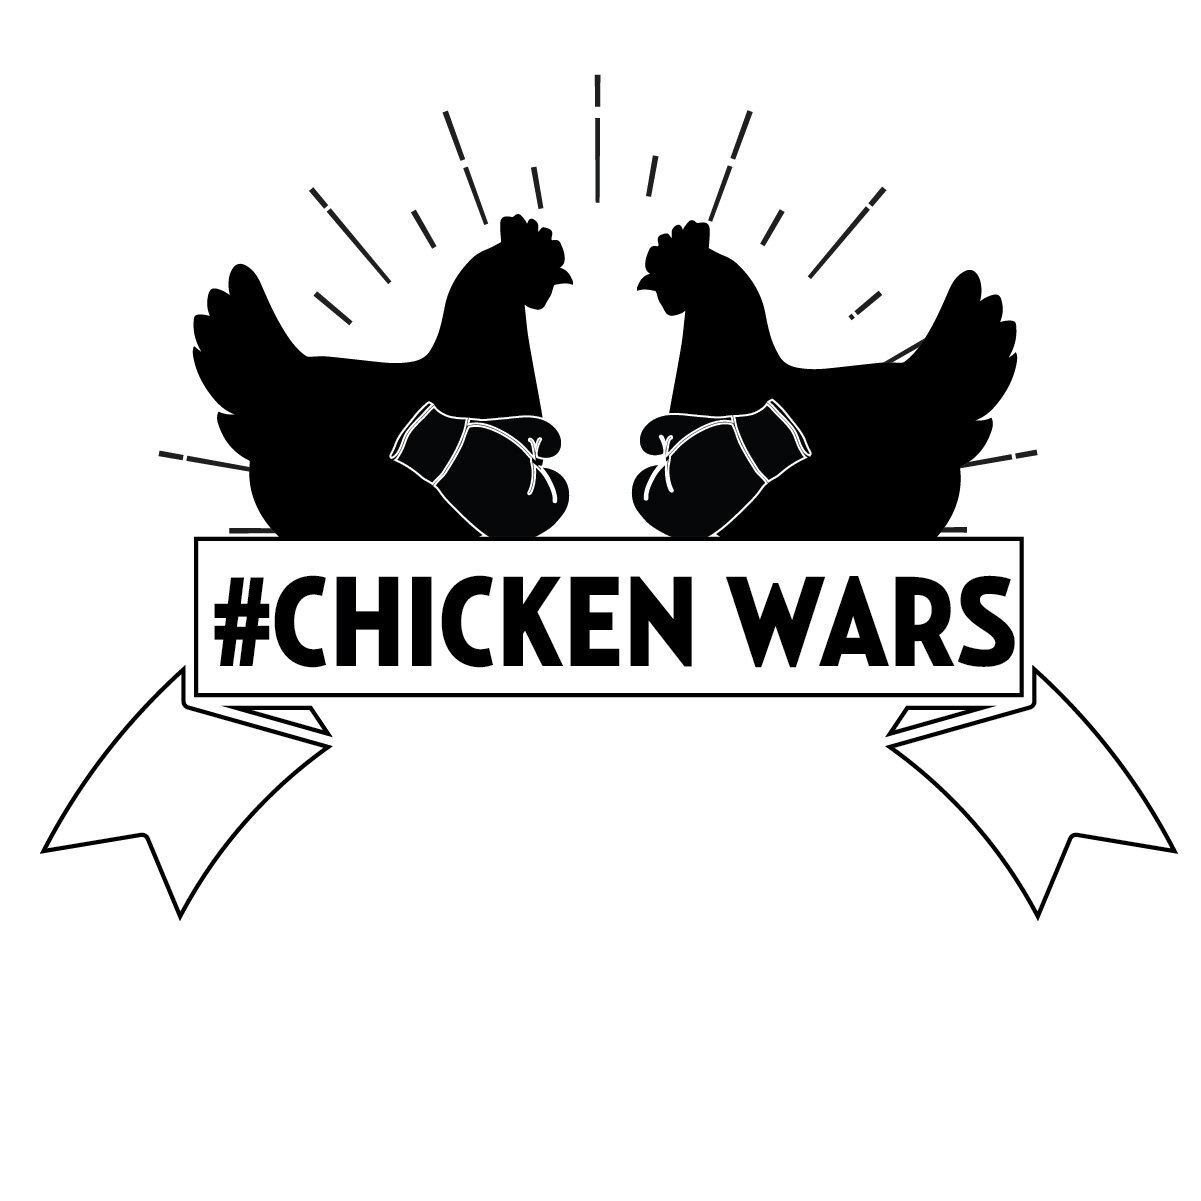 Chick Wars